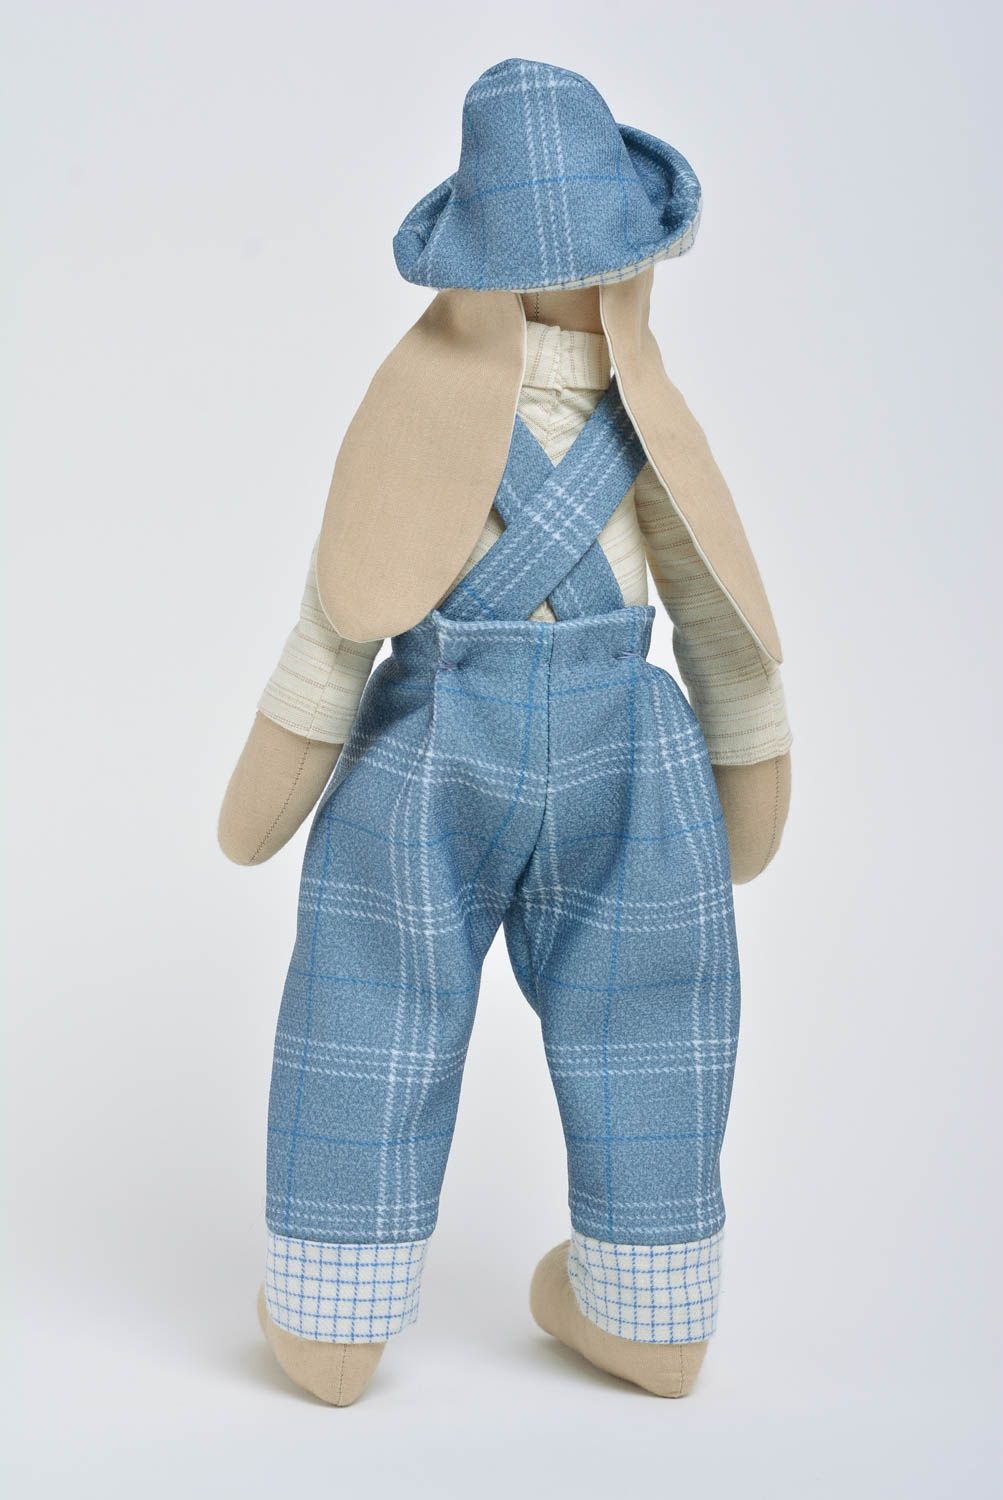 Handmade designer interior fabric soft toy rabbit boy in blue costume and hat photo 3